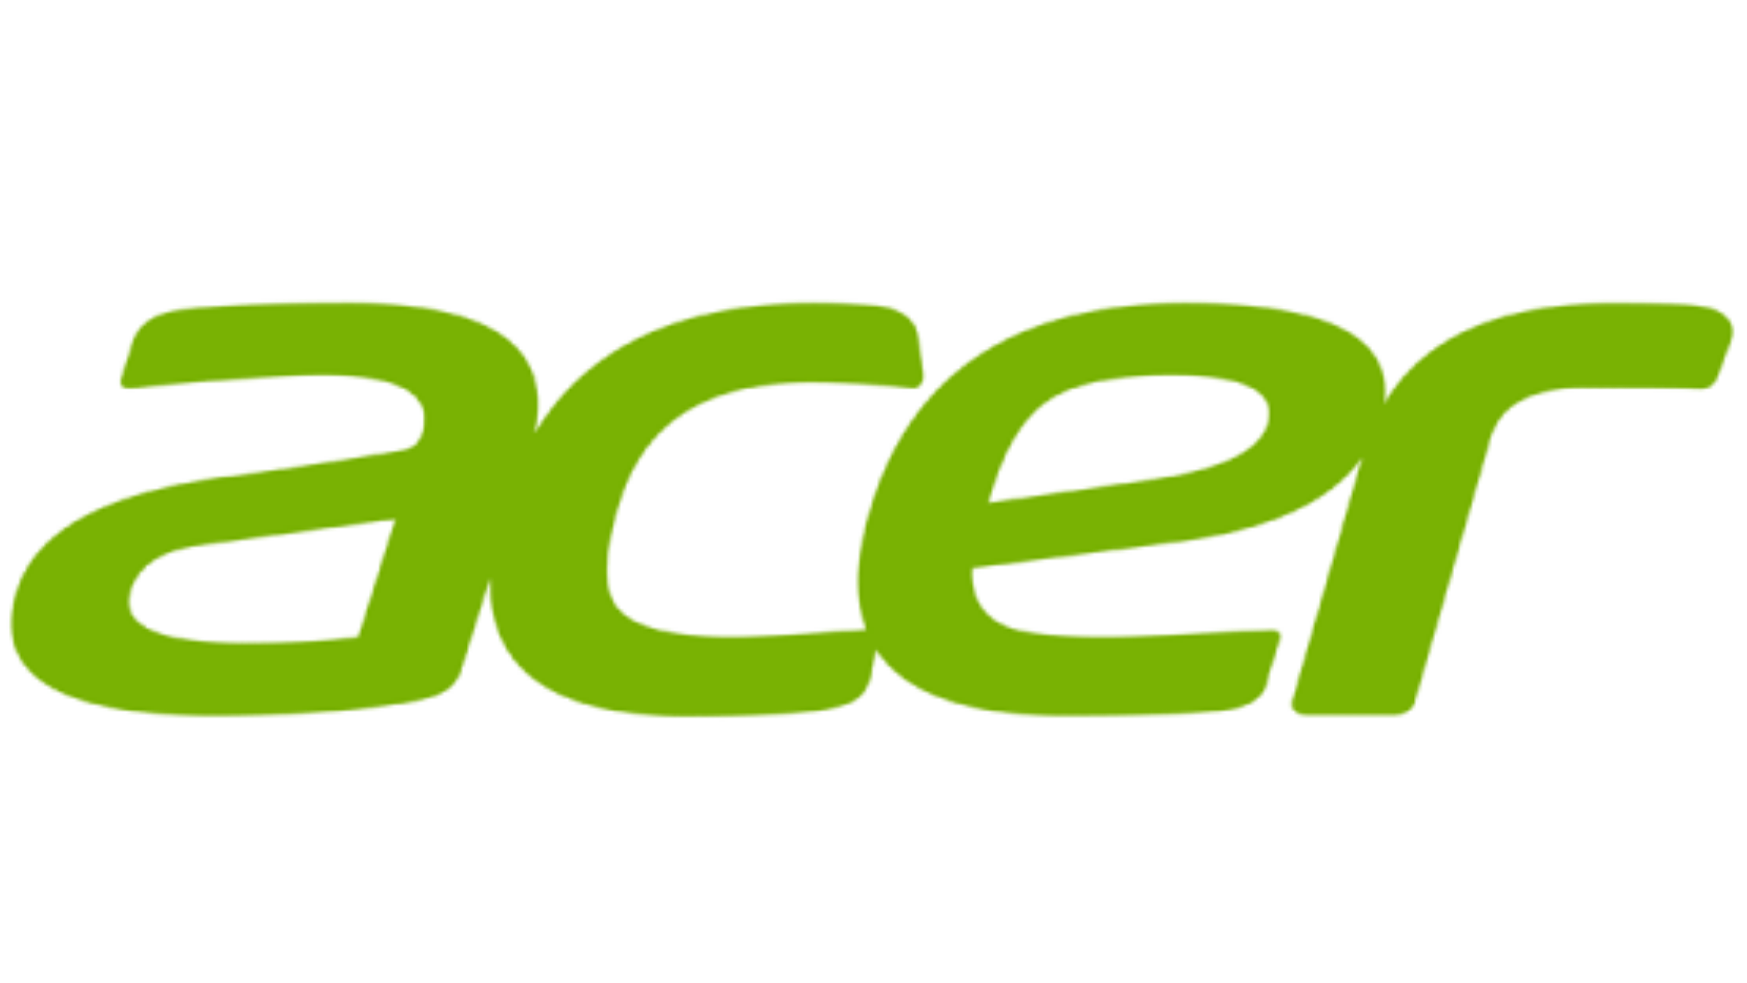 Acer.com: 15 Prozent Rabatt auf alles abräumen